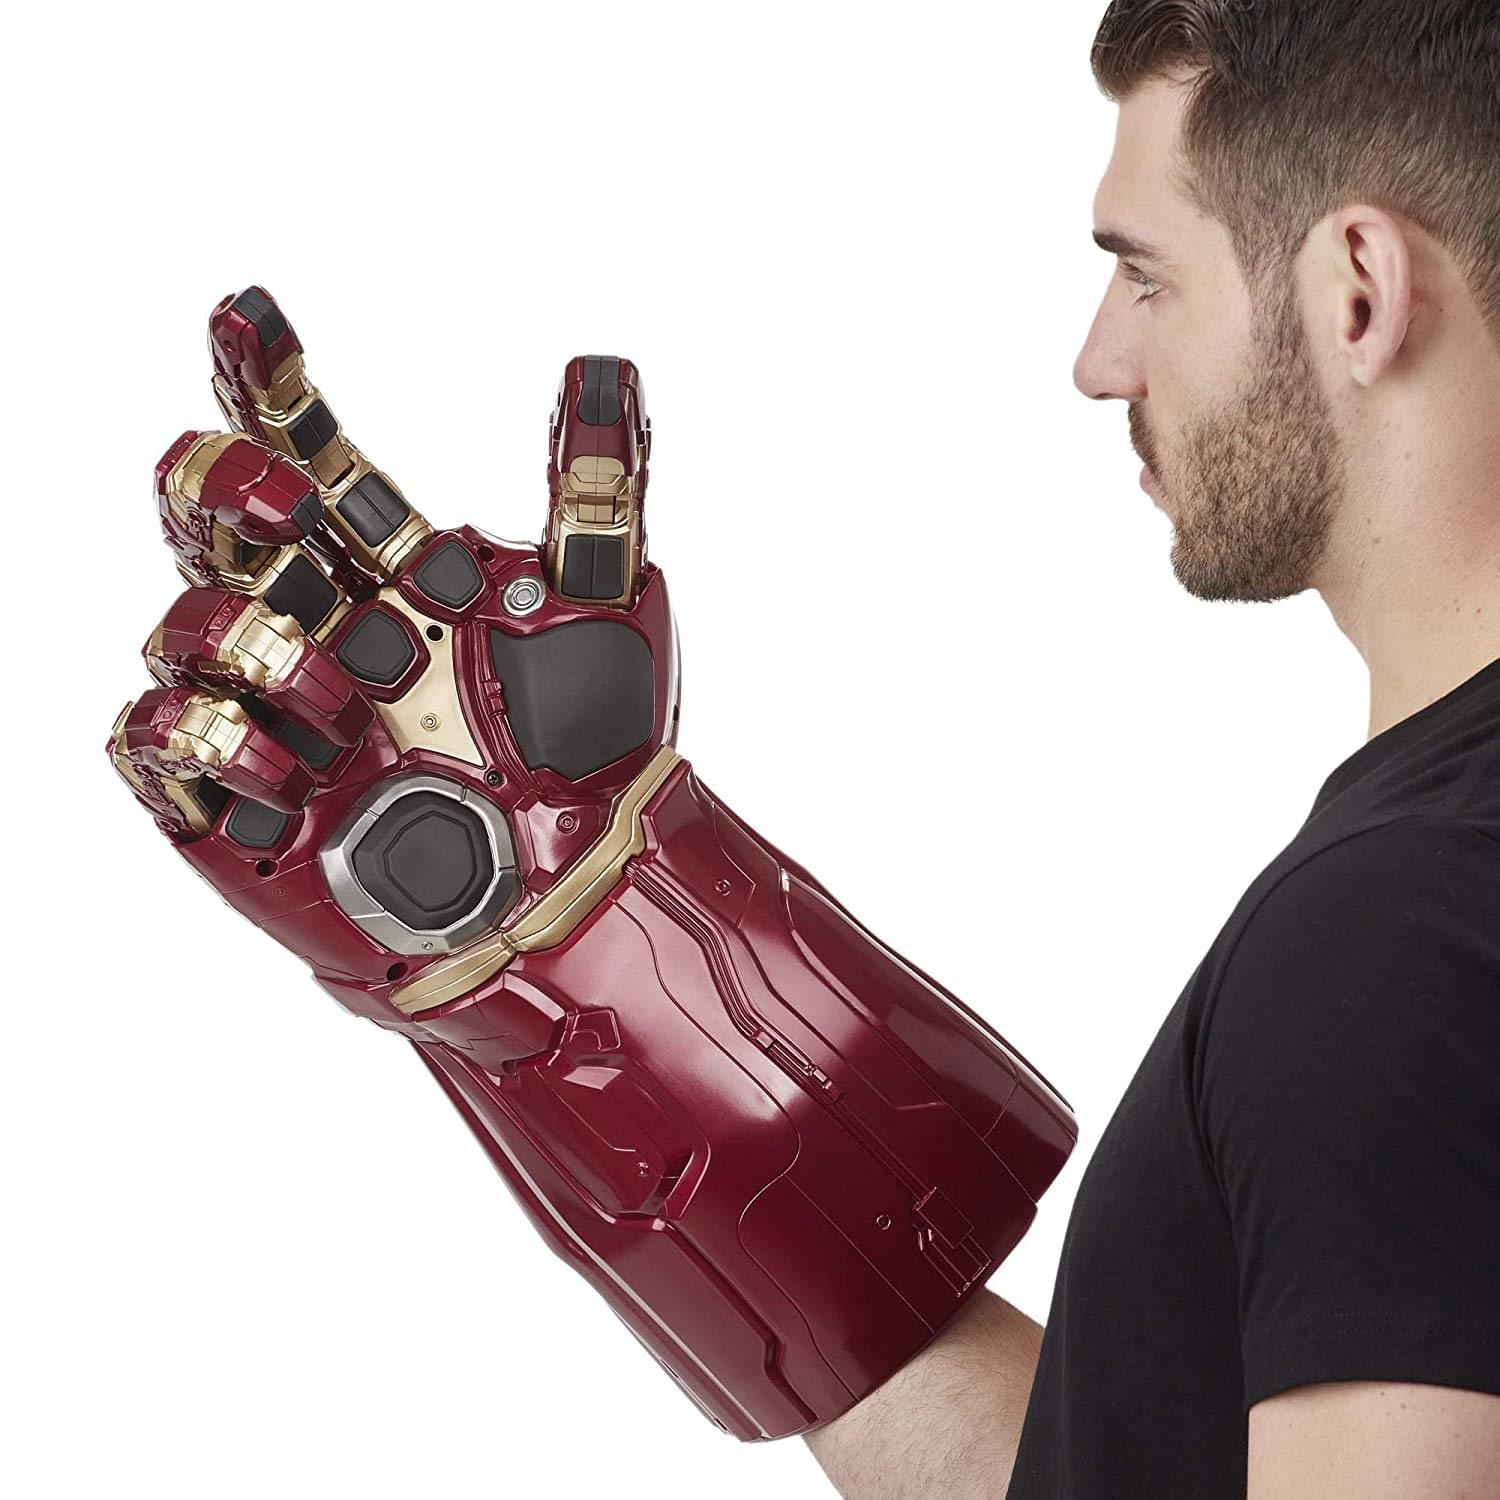 Marvel Legends Avengers Endgame Electronic Power Gauntlet Replica